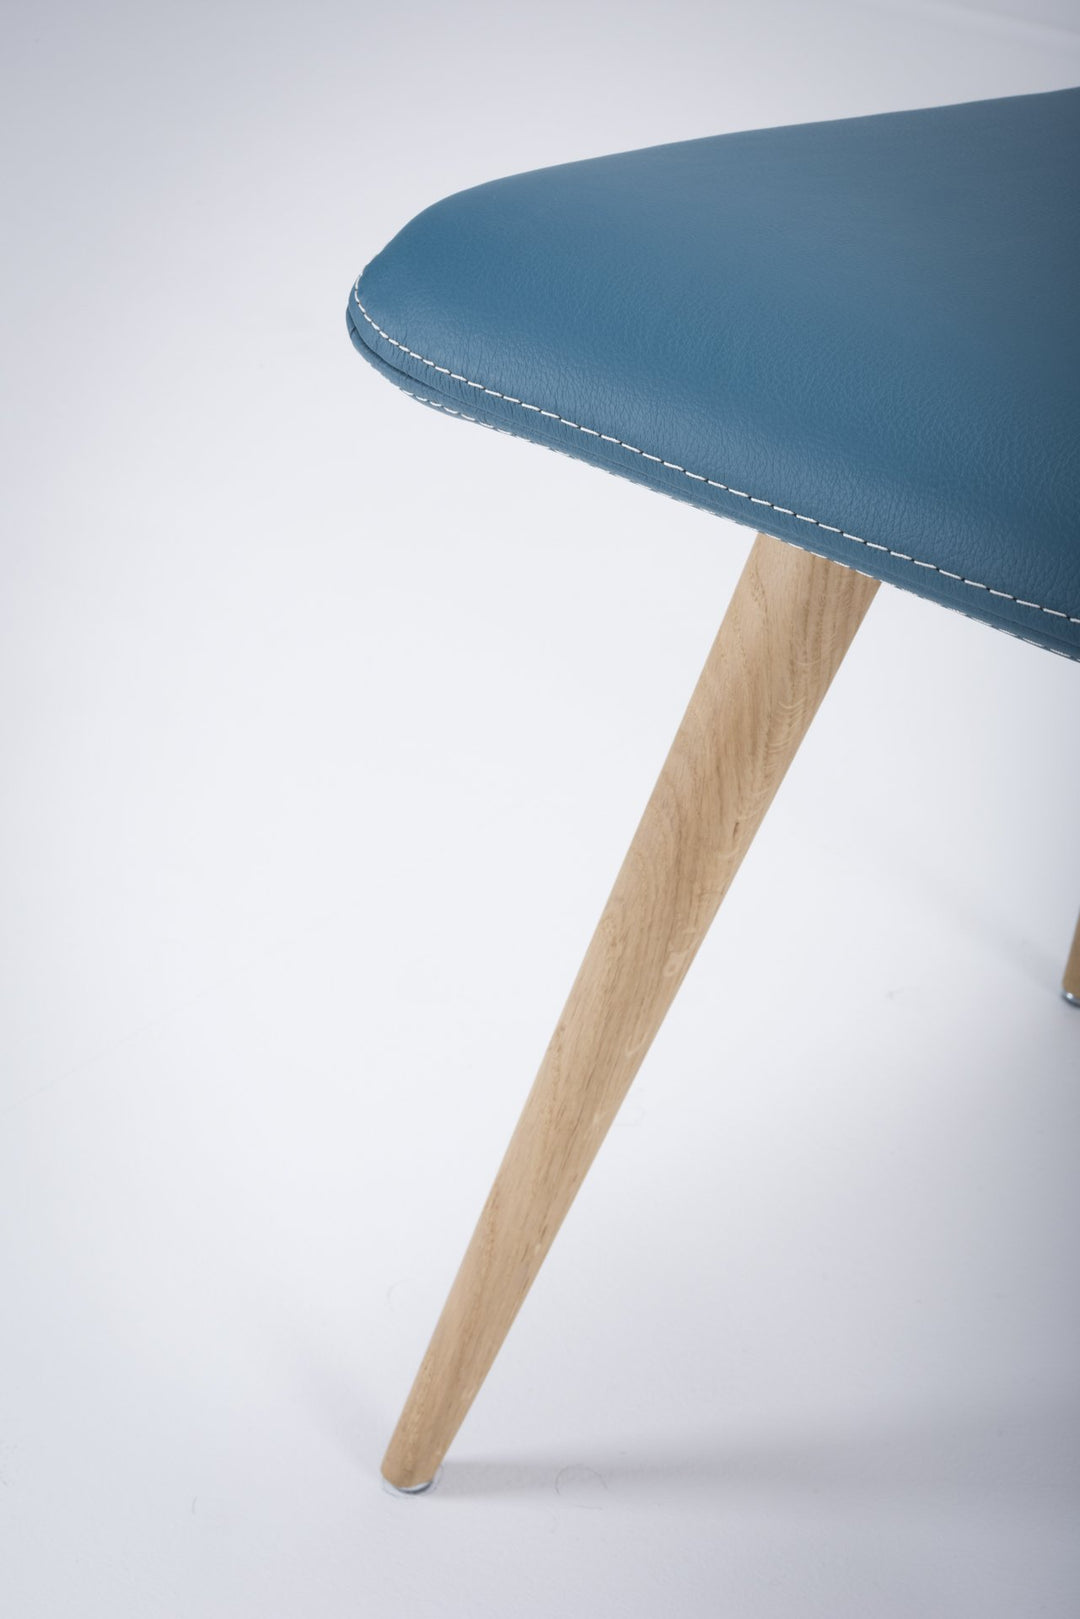 Gazzda Stuhl Turquoise / weiß geölt 1015 Stuhl ENA mit Lederbezug von Gazzda - 2 Stühle á 345 Euro